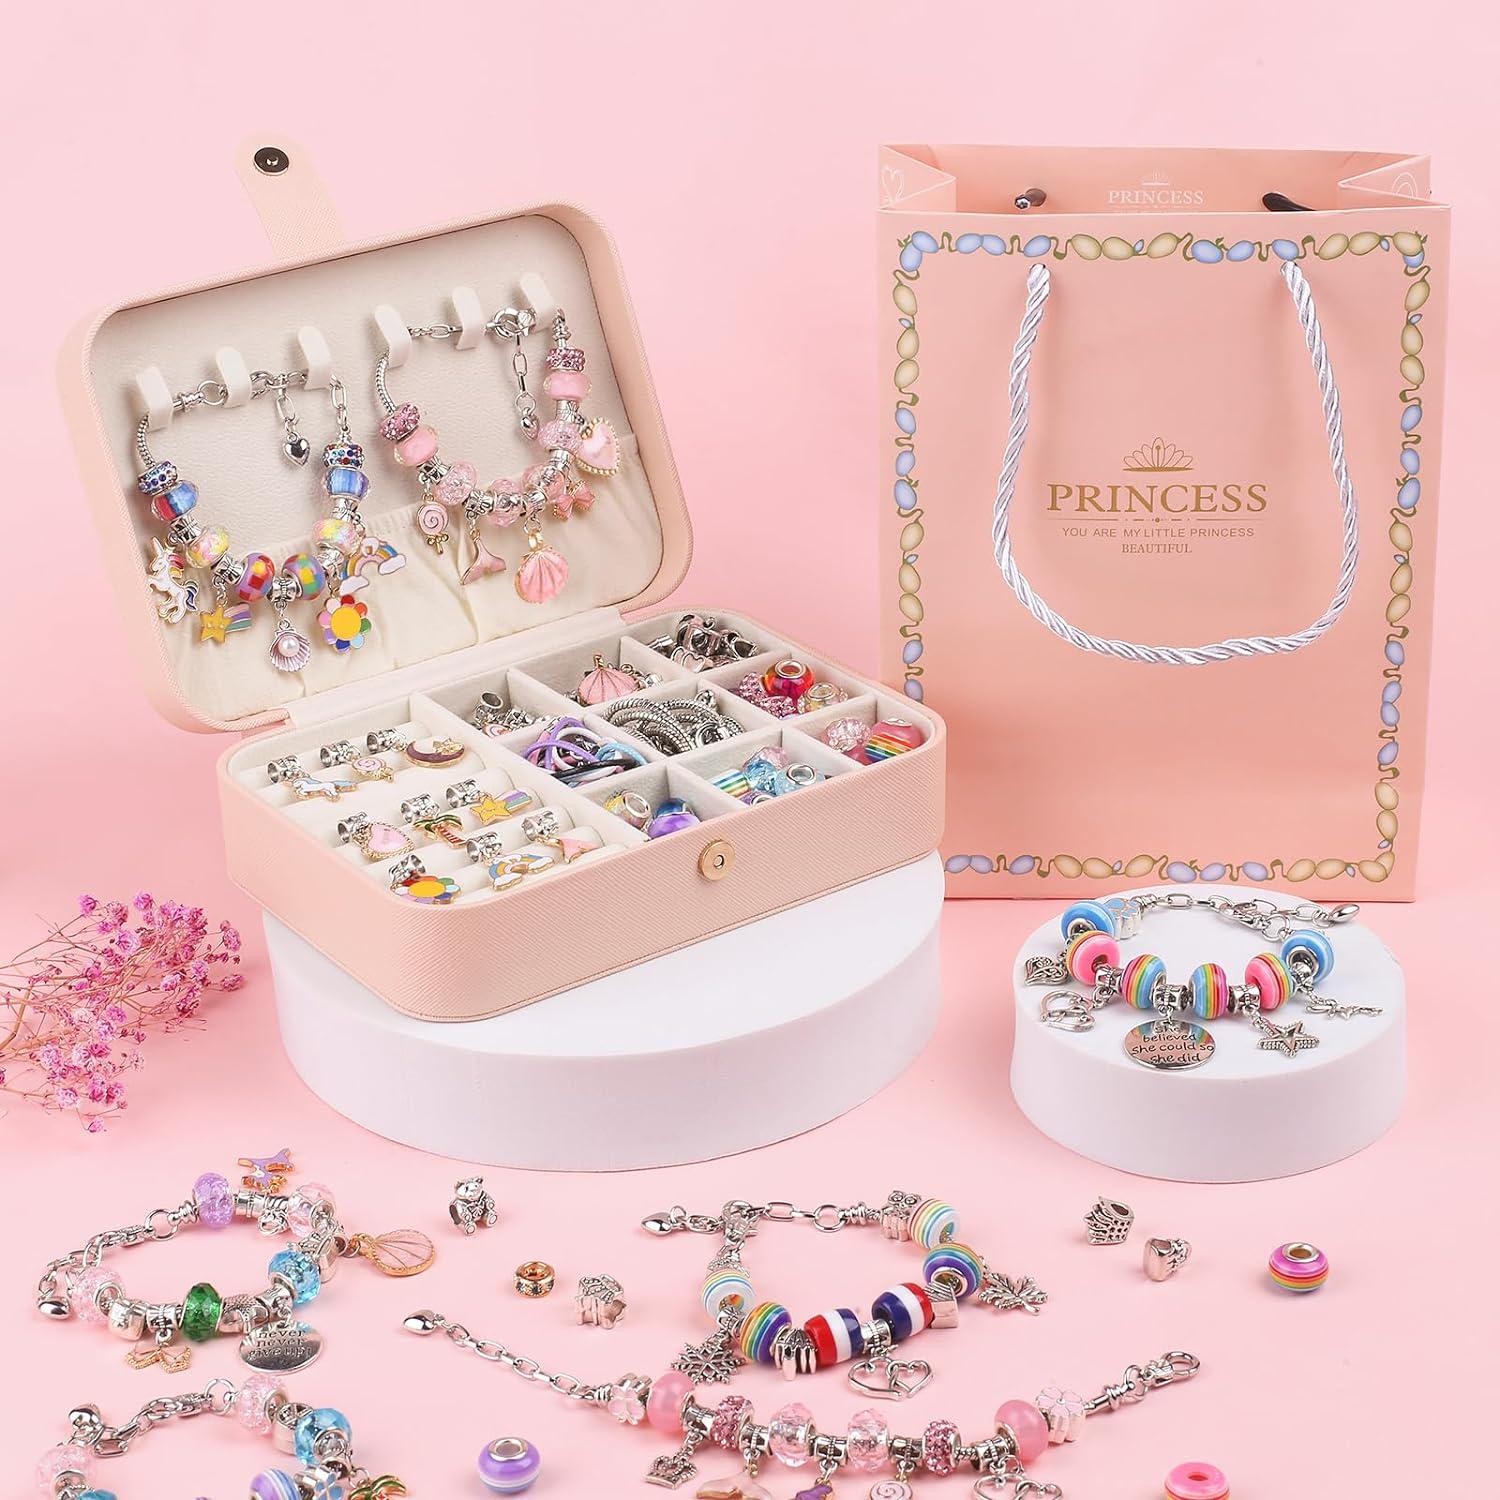  UFU Charm Bracelet Making Kit Girls Beads for Jewelry Making  Kit, Unicorns Arts Crafts Gifts Set for Teen Girls Age 5 6 7 8-12, with a  Portable Bracelet Organizer Box